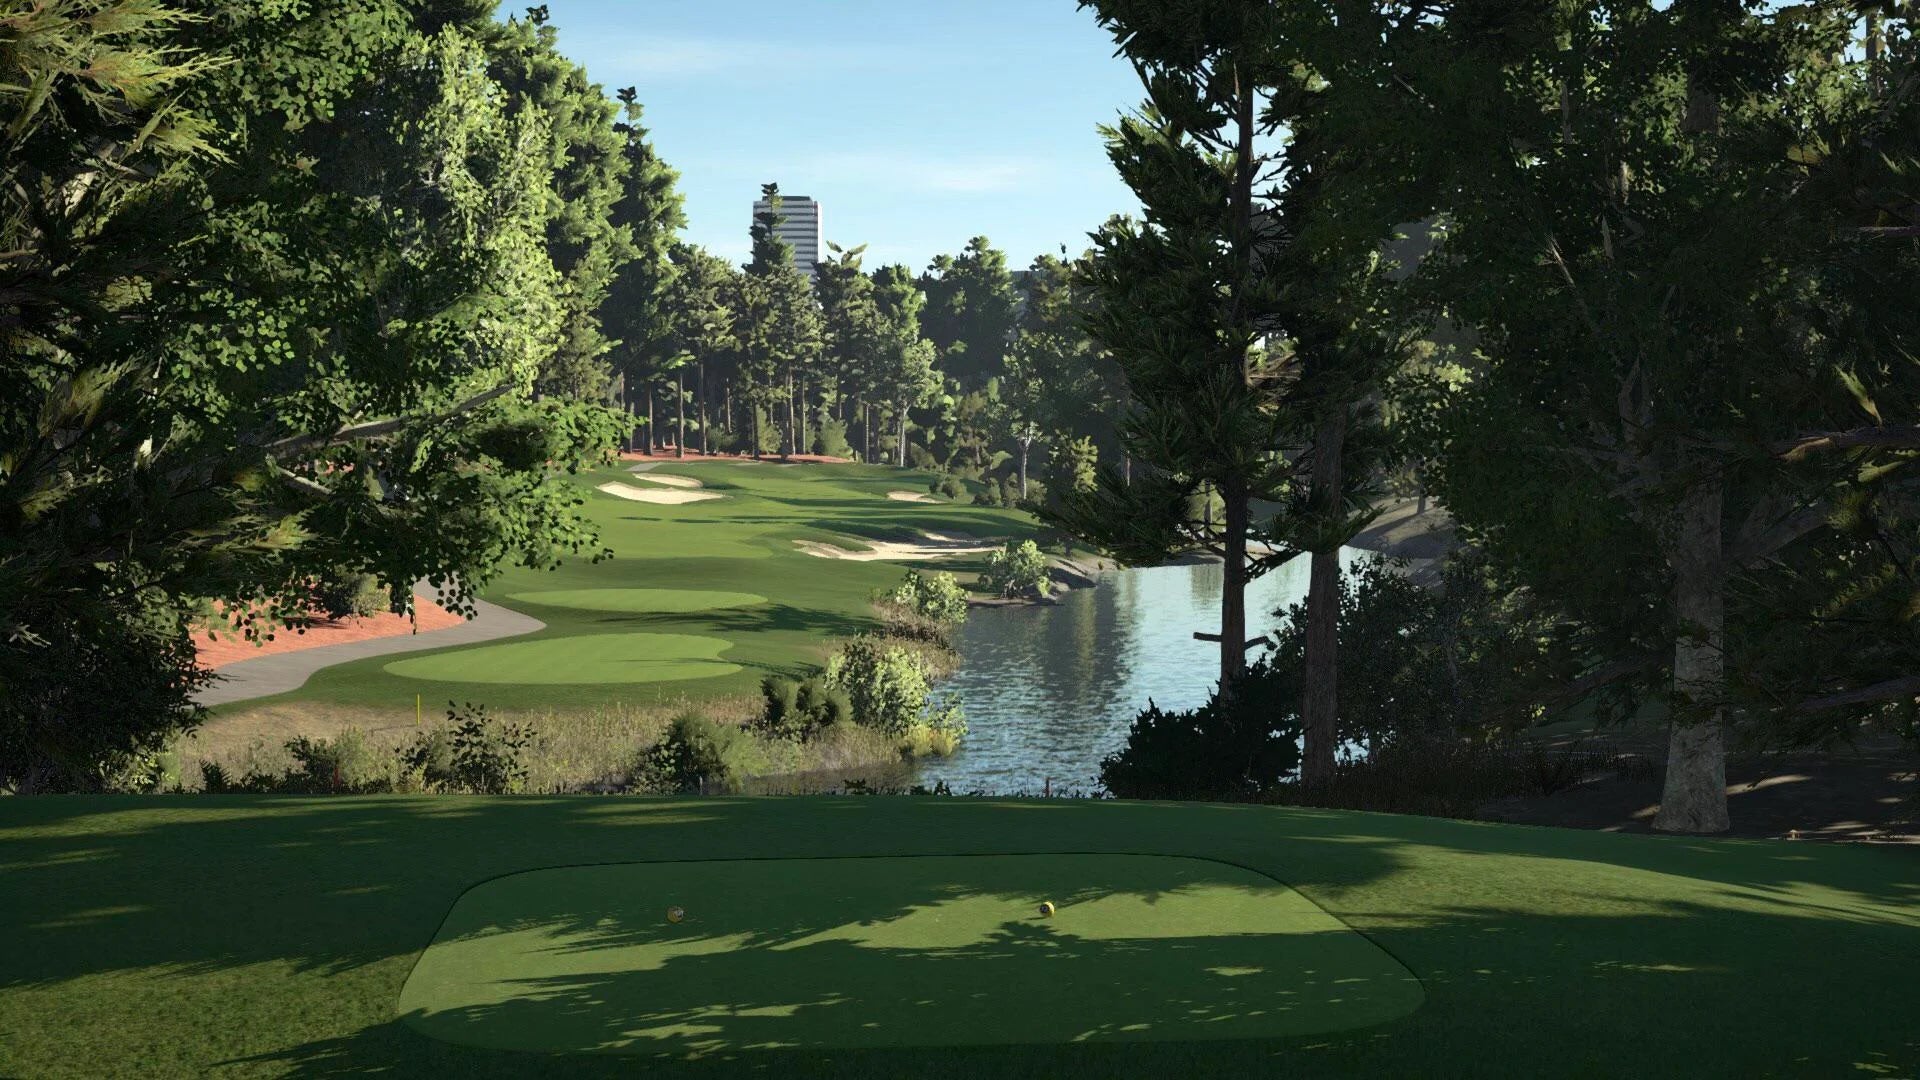 TGC2019 Golf Simulator Software